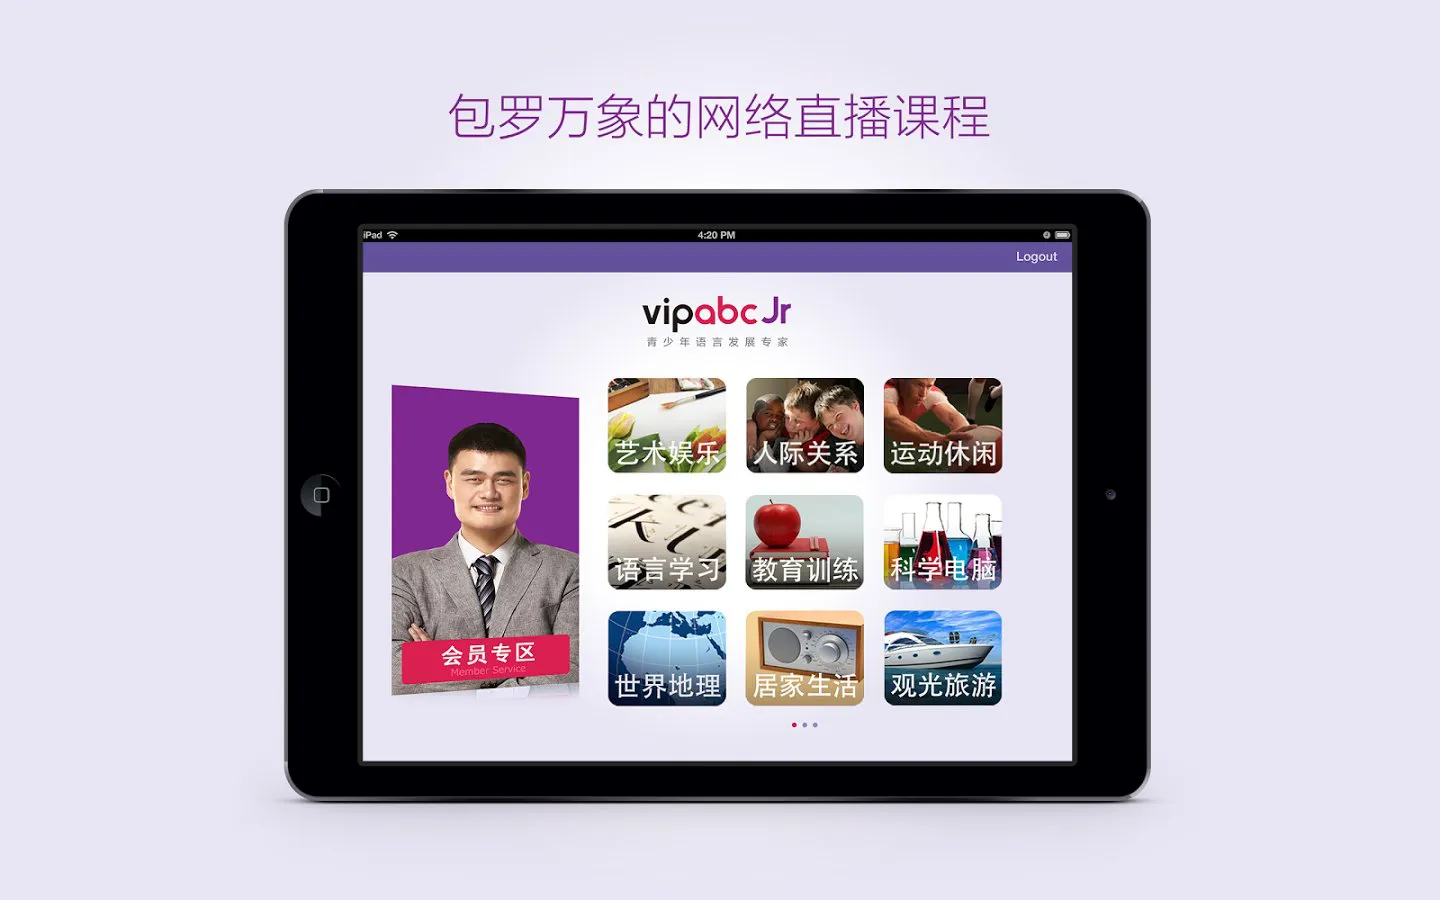 VIPABC(英语真人说) v1.1.10 安卓版 3